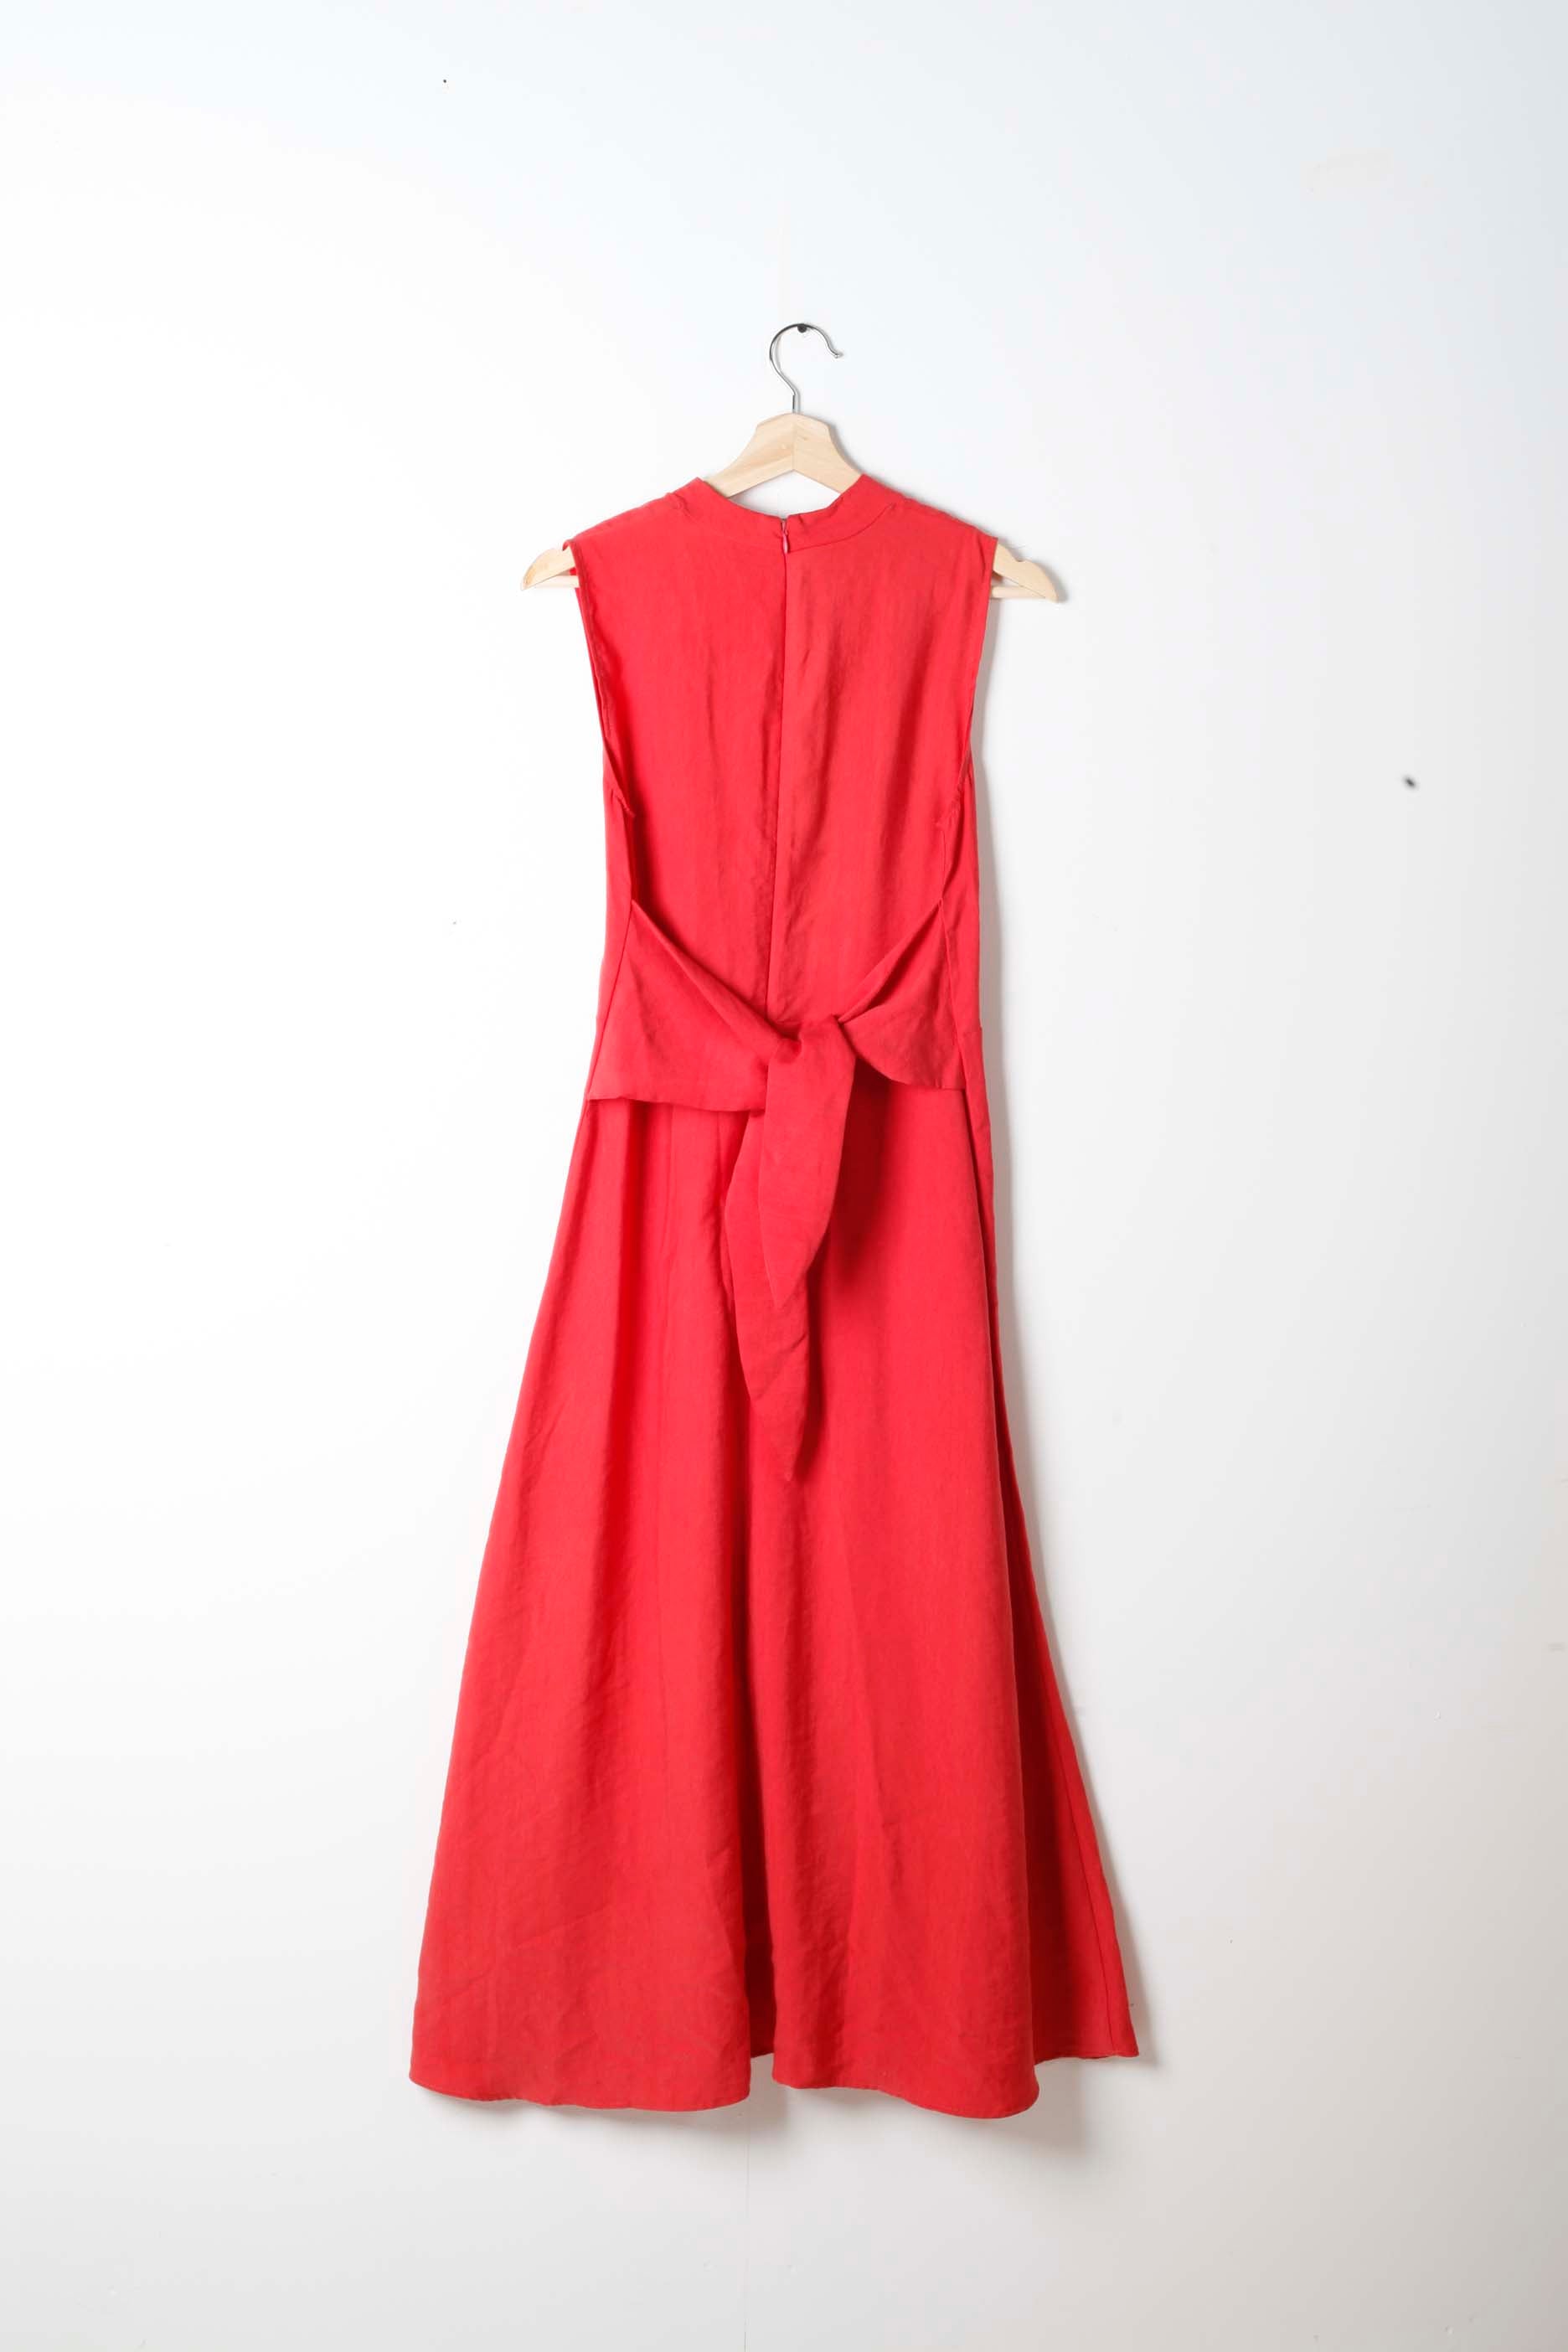 Red Sleeveless Summer Dress with Tie-Waist (Medium)